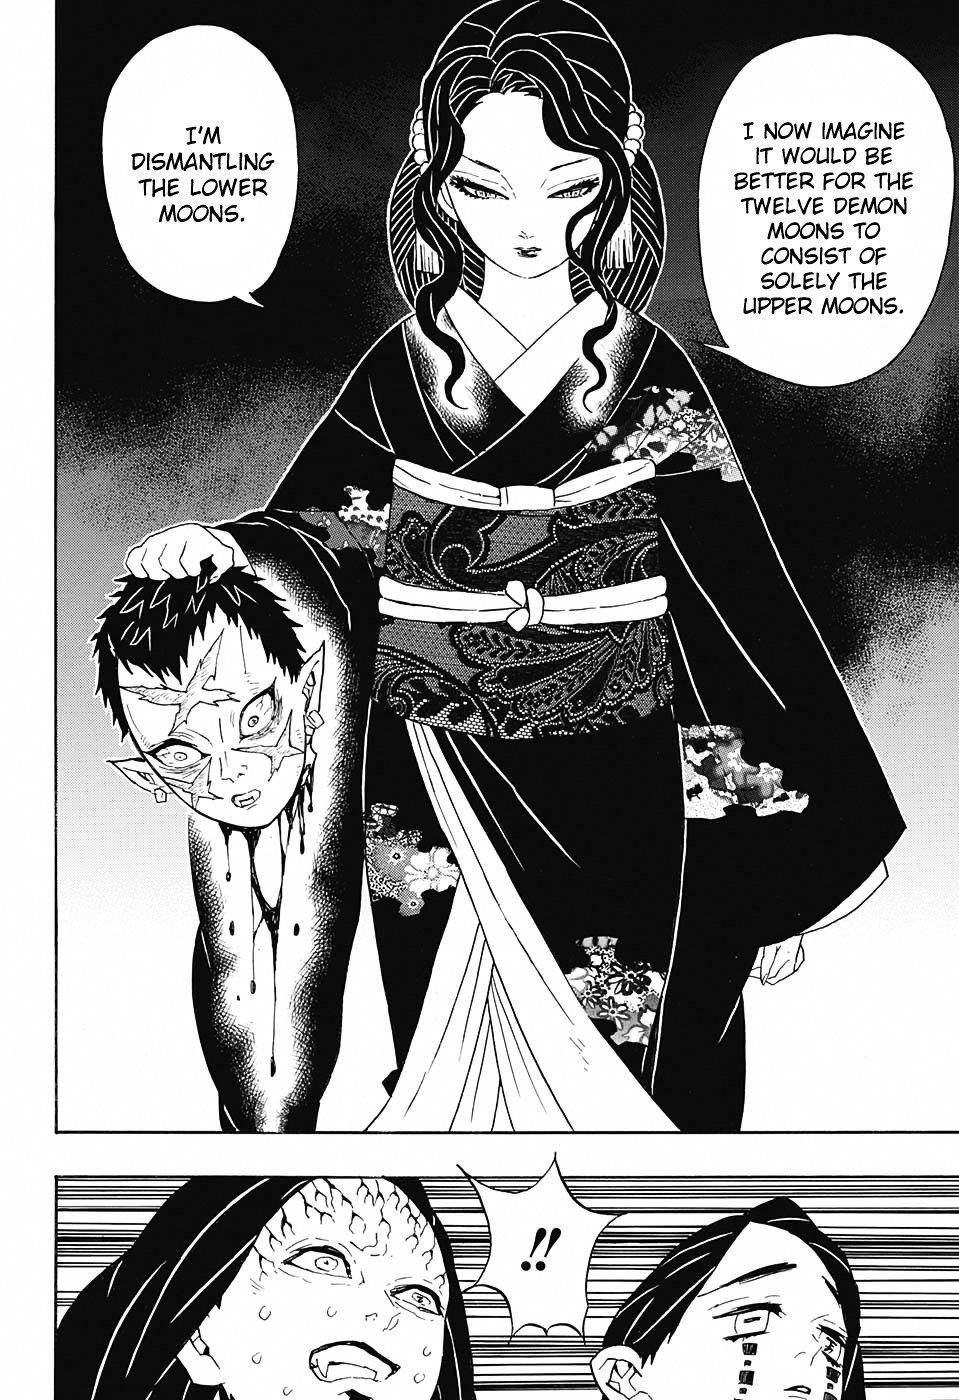 Demon Slayer: Kimetsu No Yaiba ,Chapter 52 - Demon Slayer Manga Online serapportantà Demon Slayer Scan